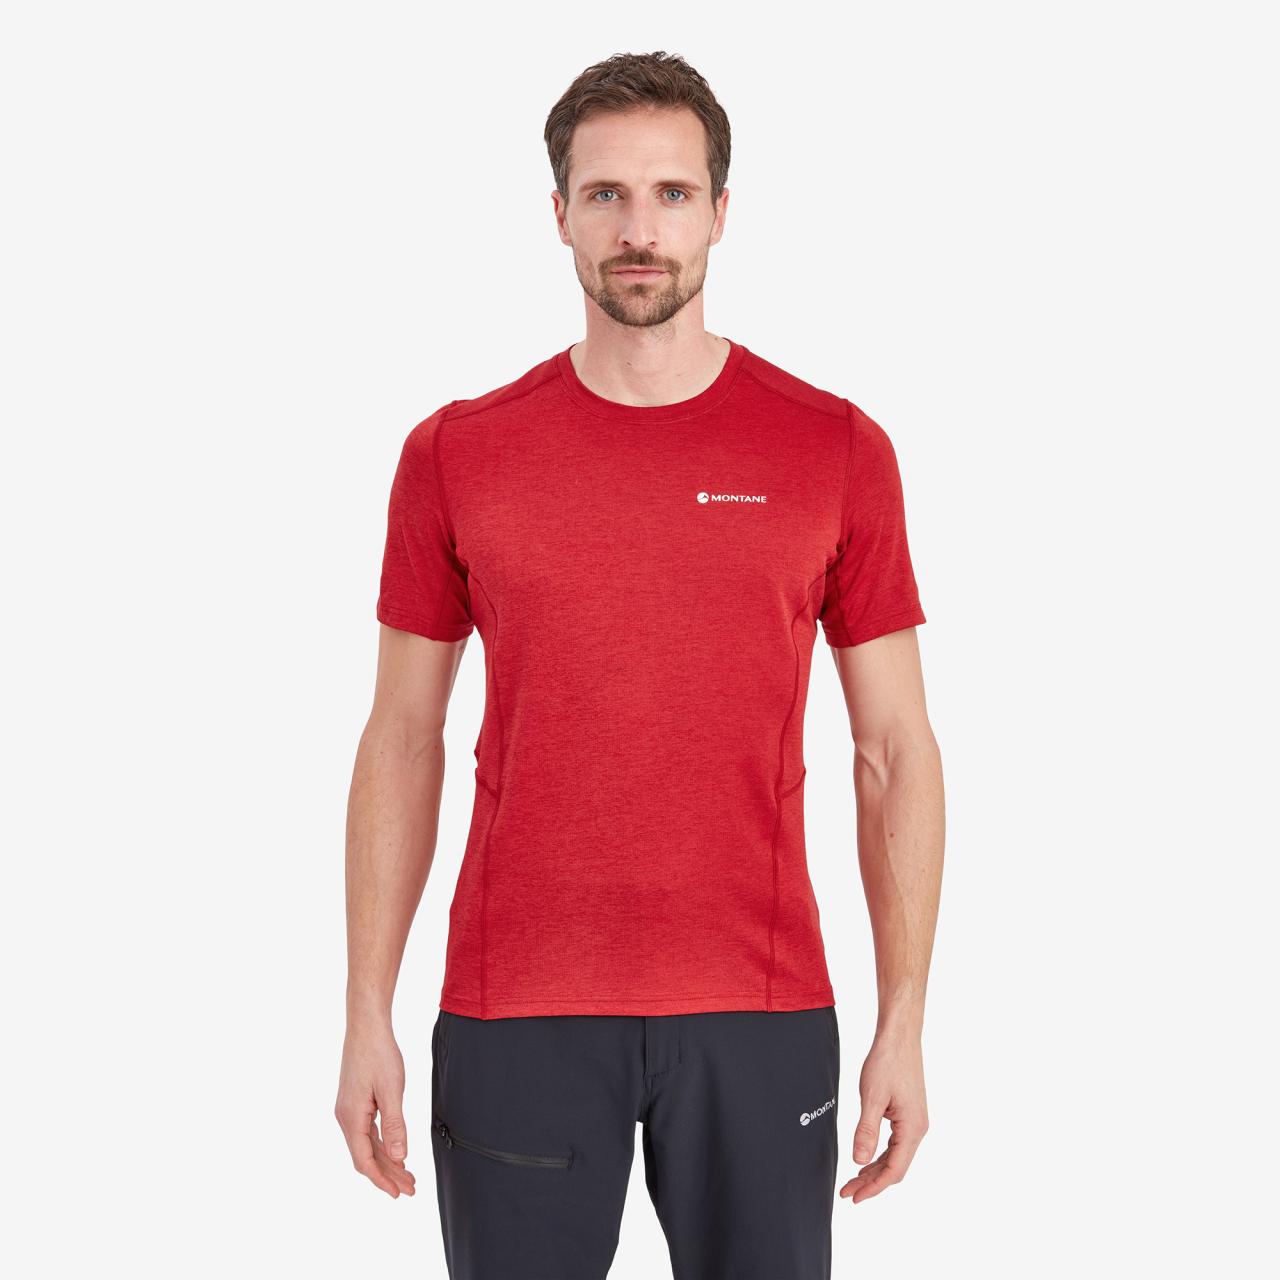 DART T-SHIRT-ACER RED-M pánské triko tmavě červené